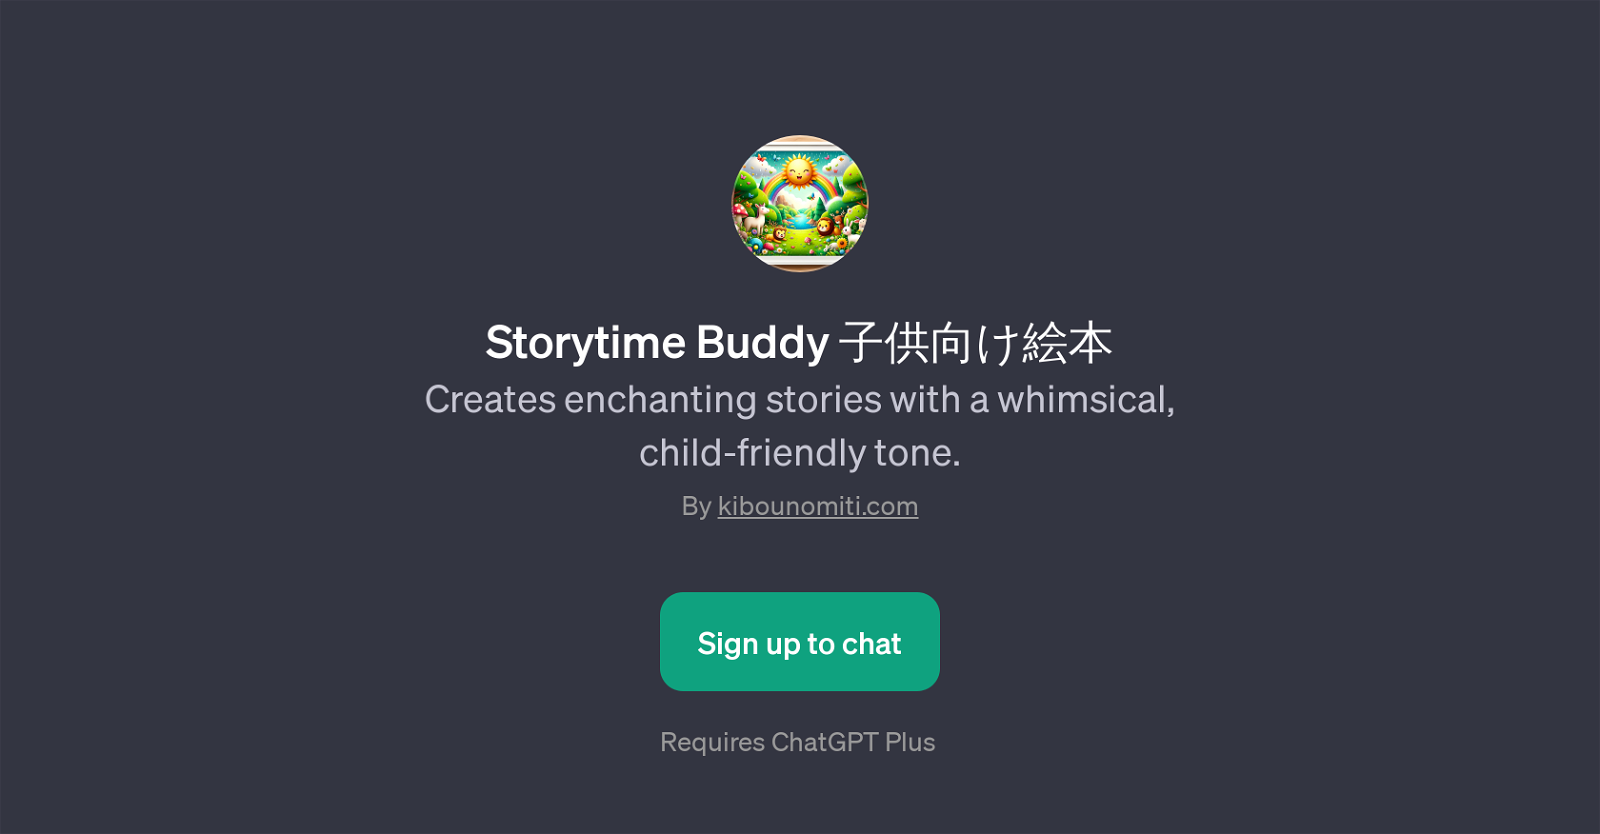 Storytime Buddy website